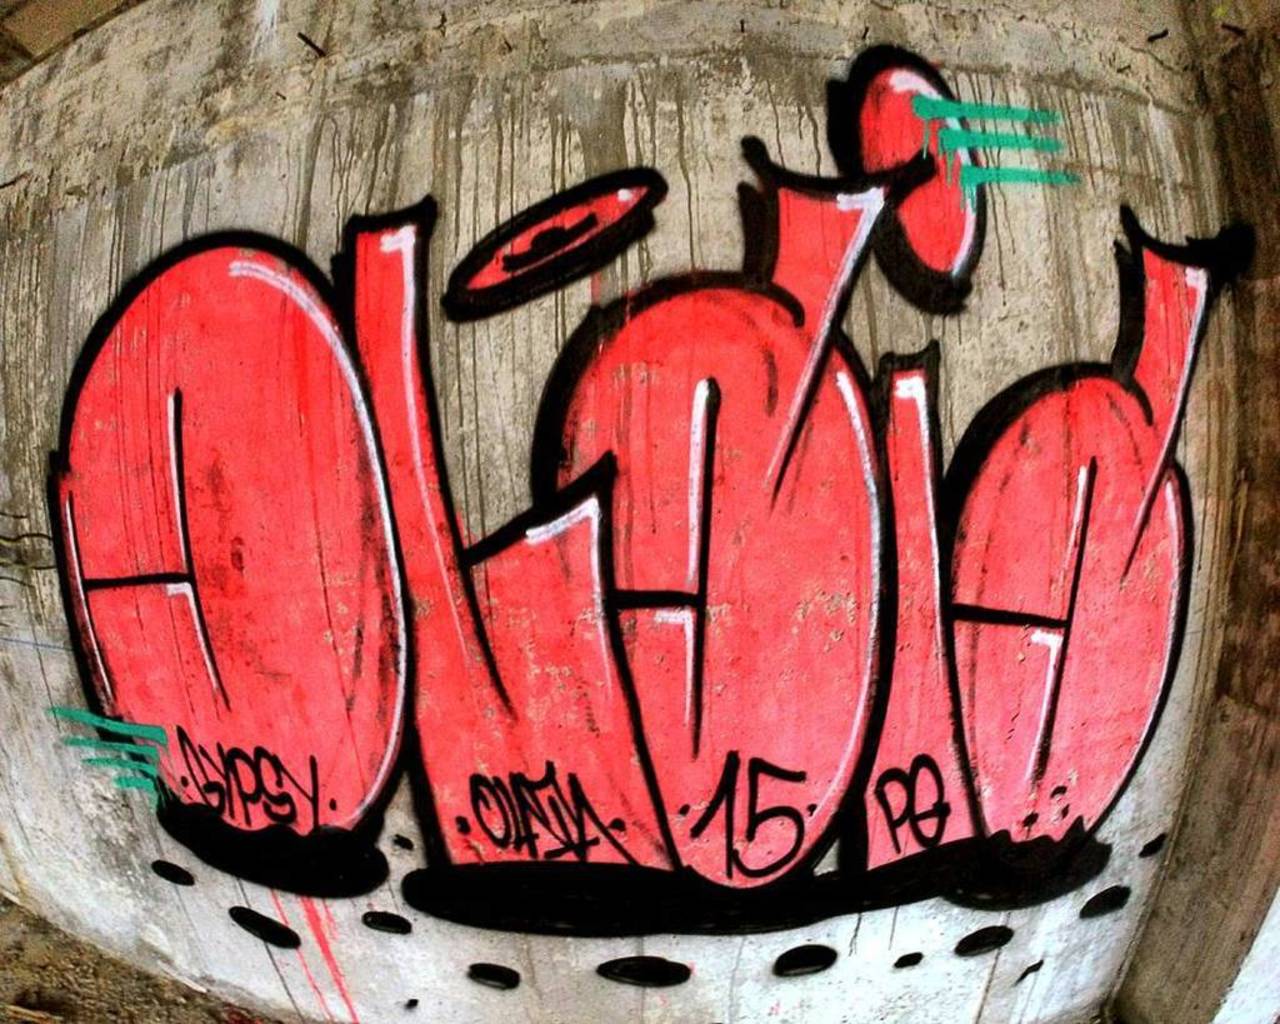 PINKKK #gopro #goprophotography #goproeu #gopro_moments #streetart #street  #streetphotography #tags #graffiti #ins… http://t.co/nDN938bDi5